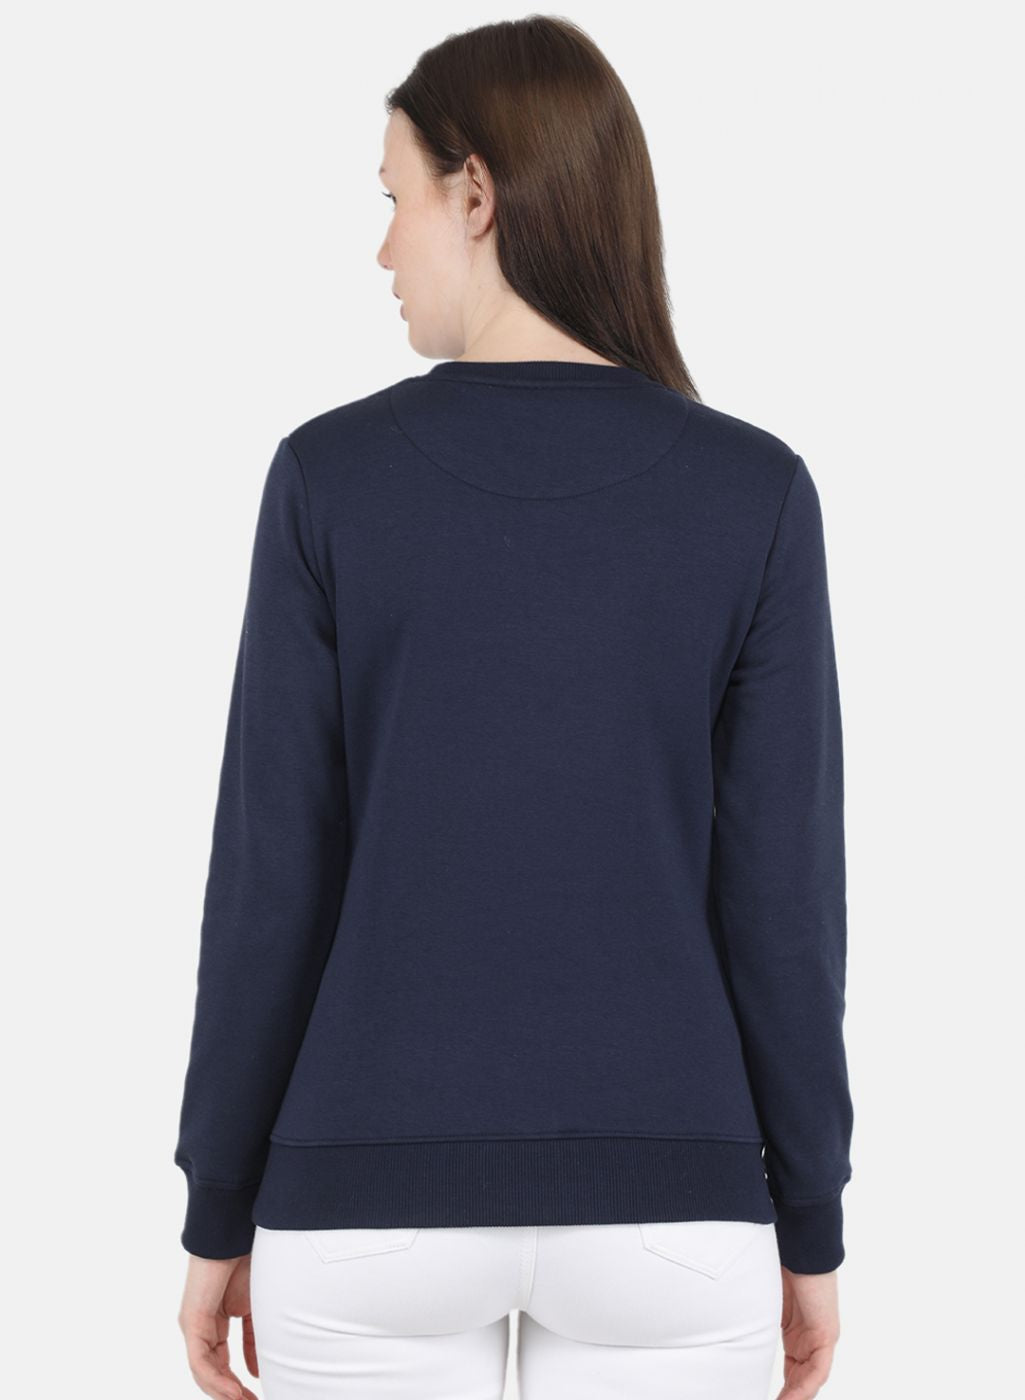 Women NAvy Blue Printed Sweatshirt